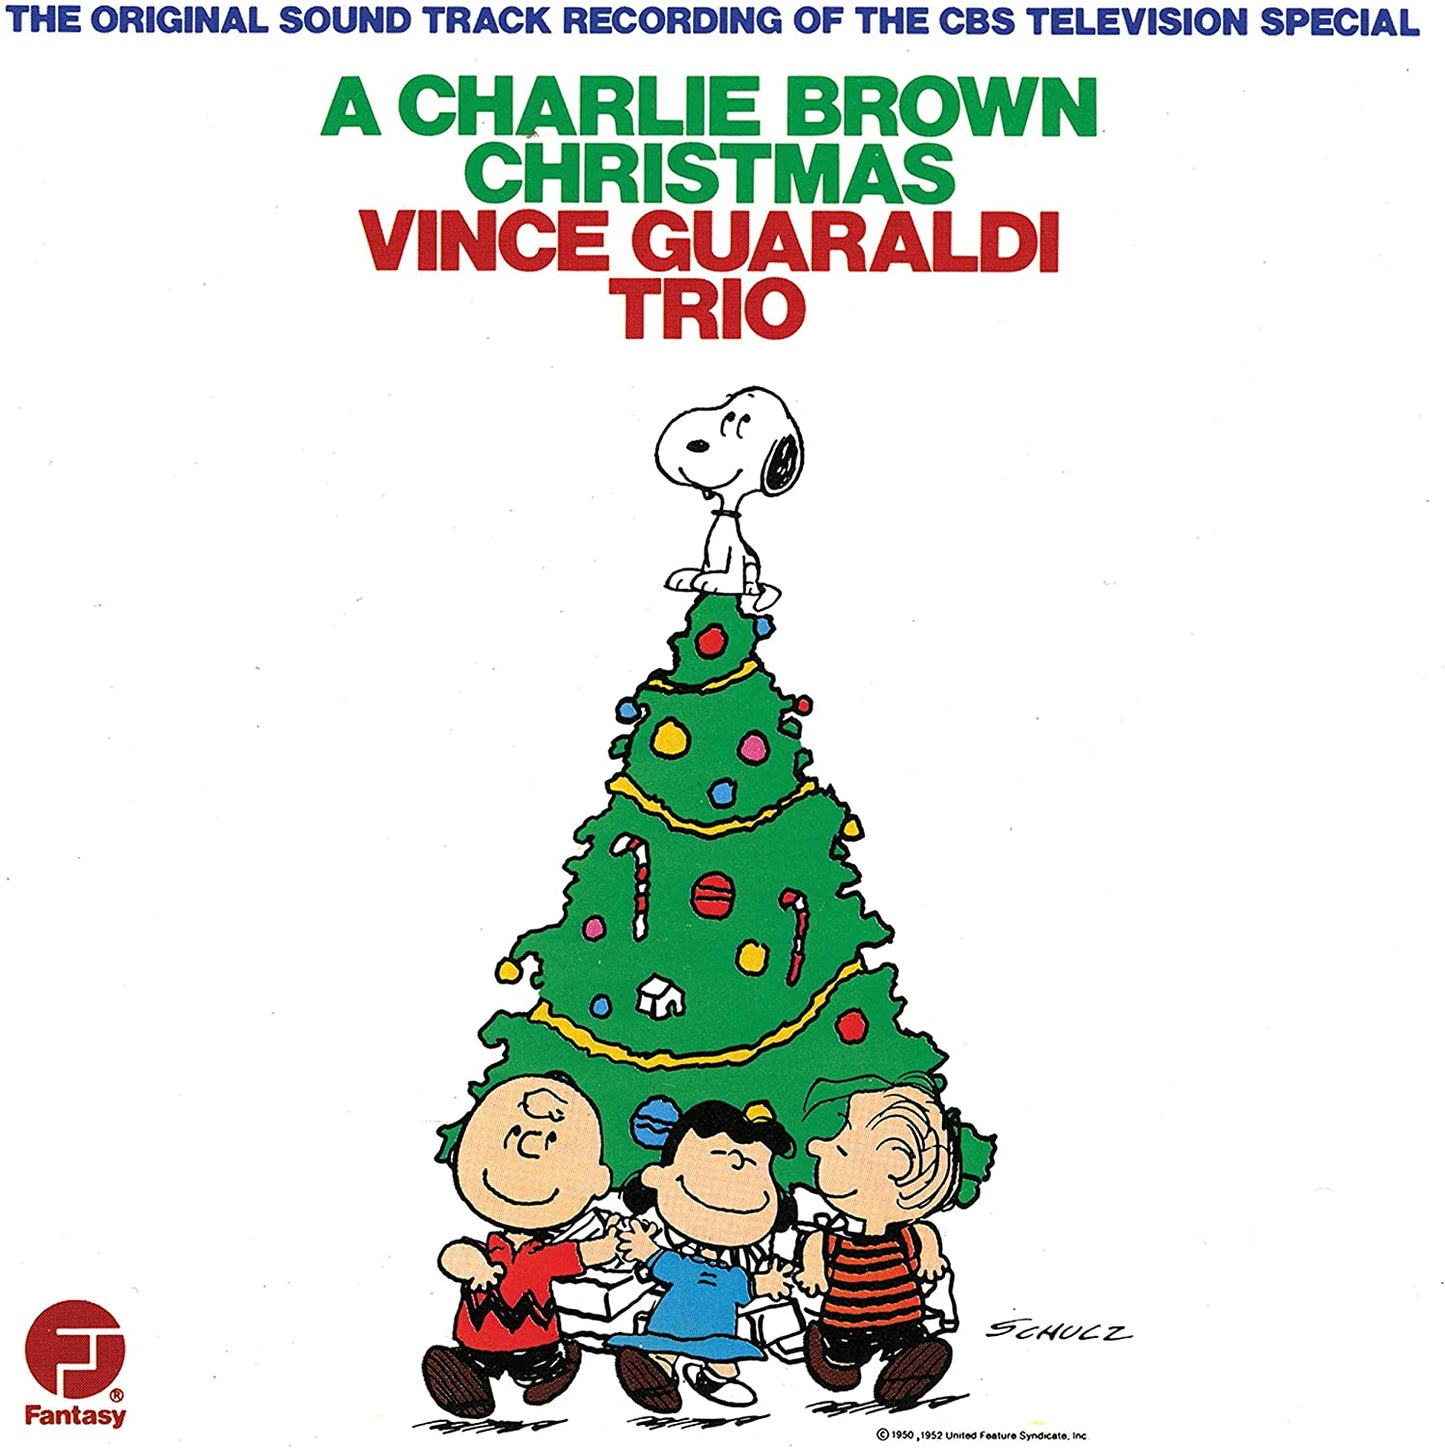 Guaraldi, Vince/A Charlie Brown Christmas (Green Vinyl) [LP]